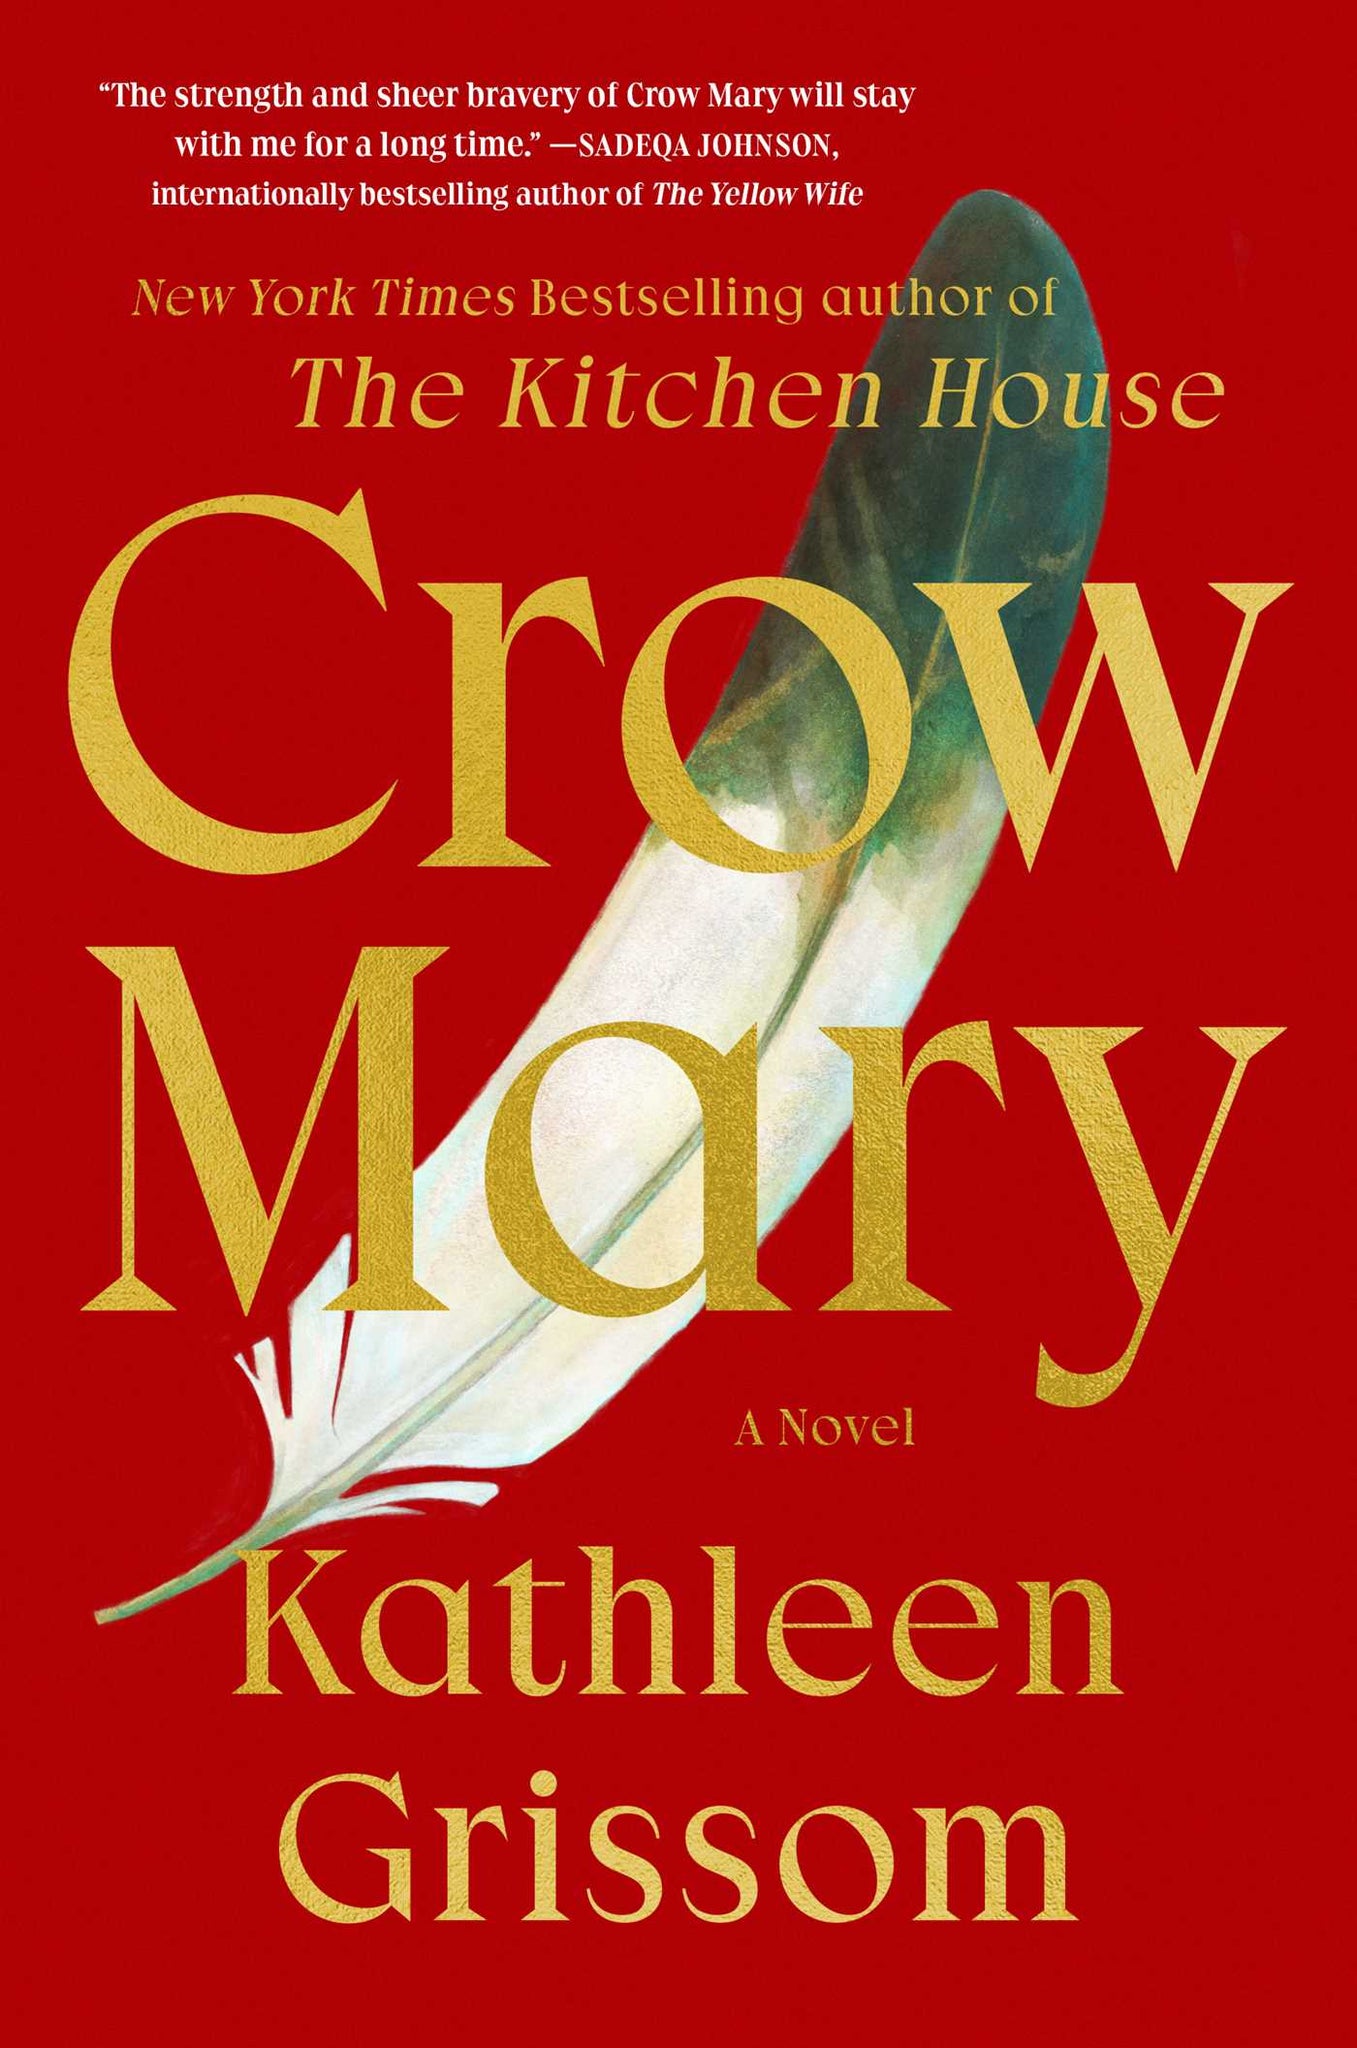 Crow Mary - Kathleen Grissom